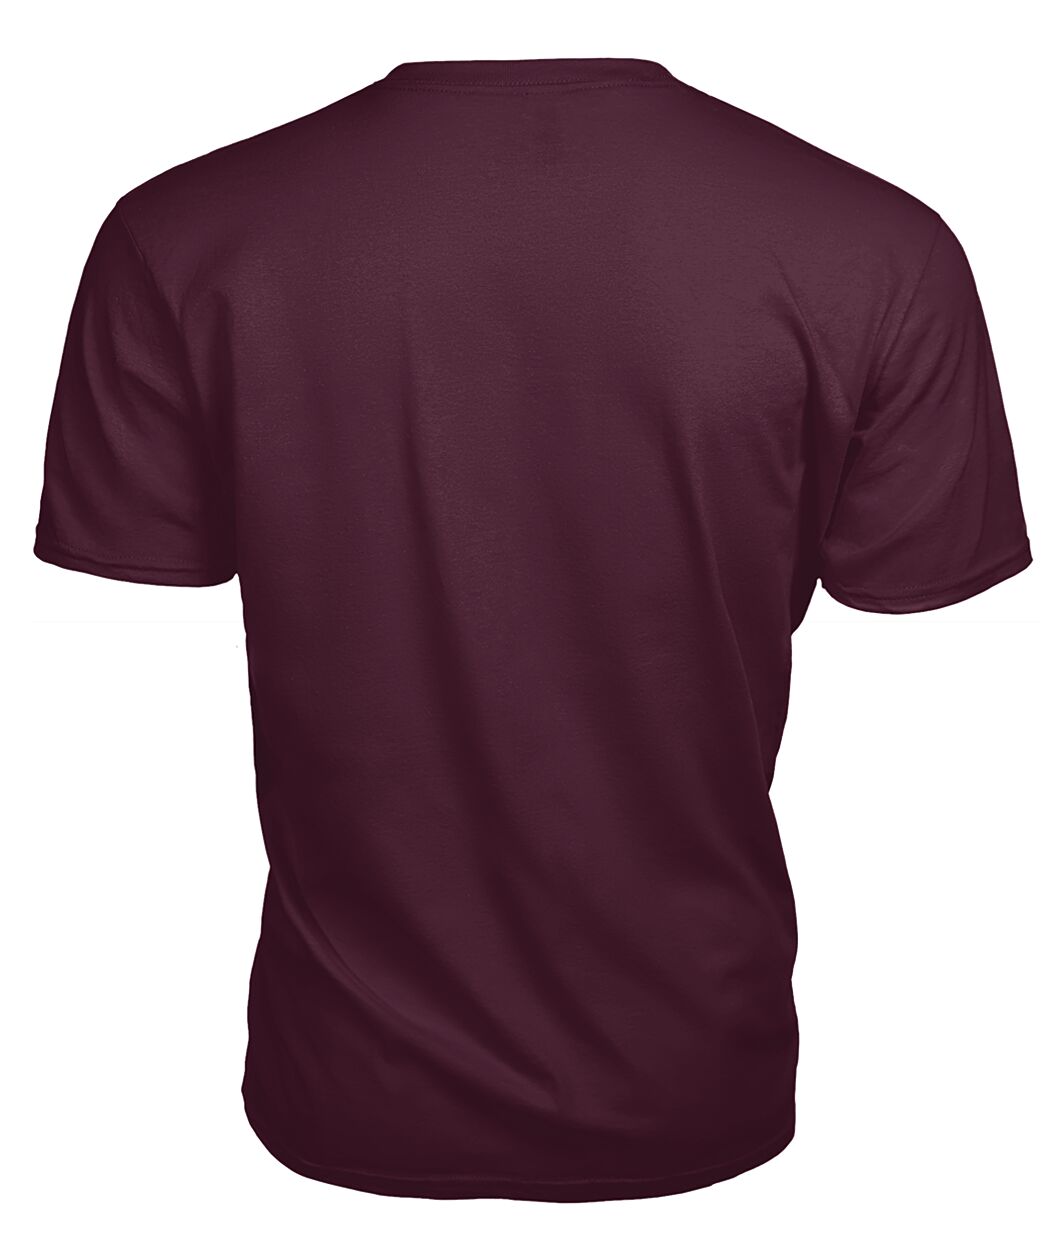 MacQuarrie Family Tartan - 2D T-shirt